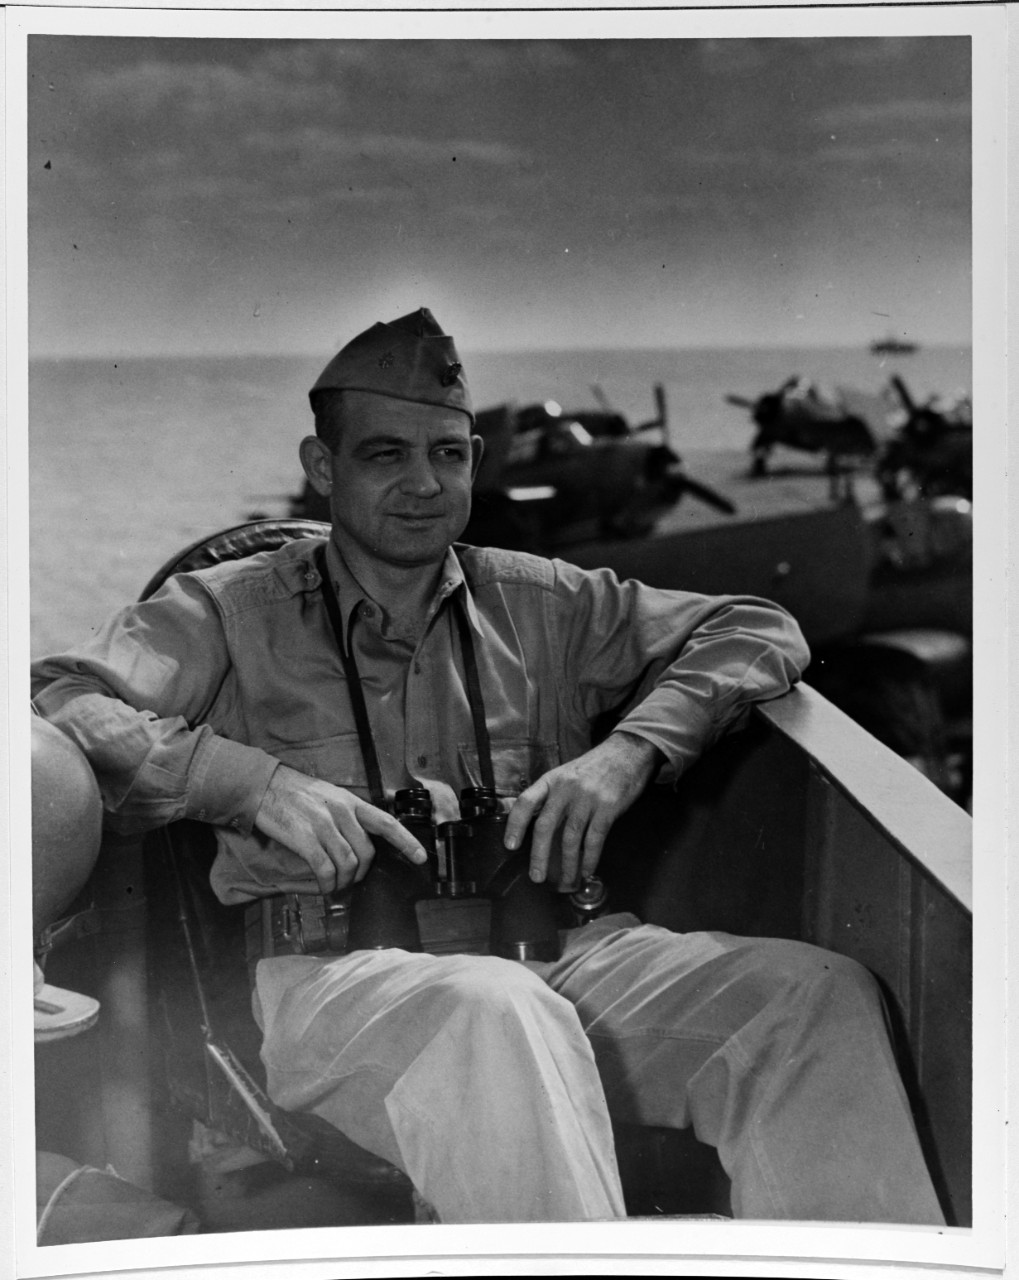 Lieutenant Commander Ralph C. Draper, USNR